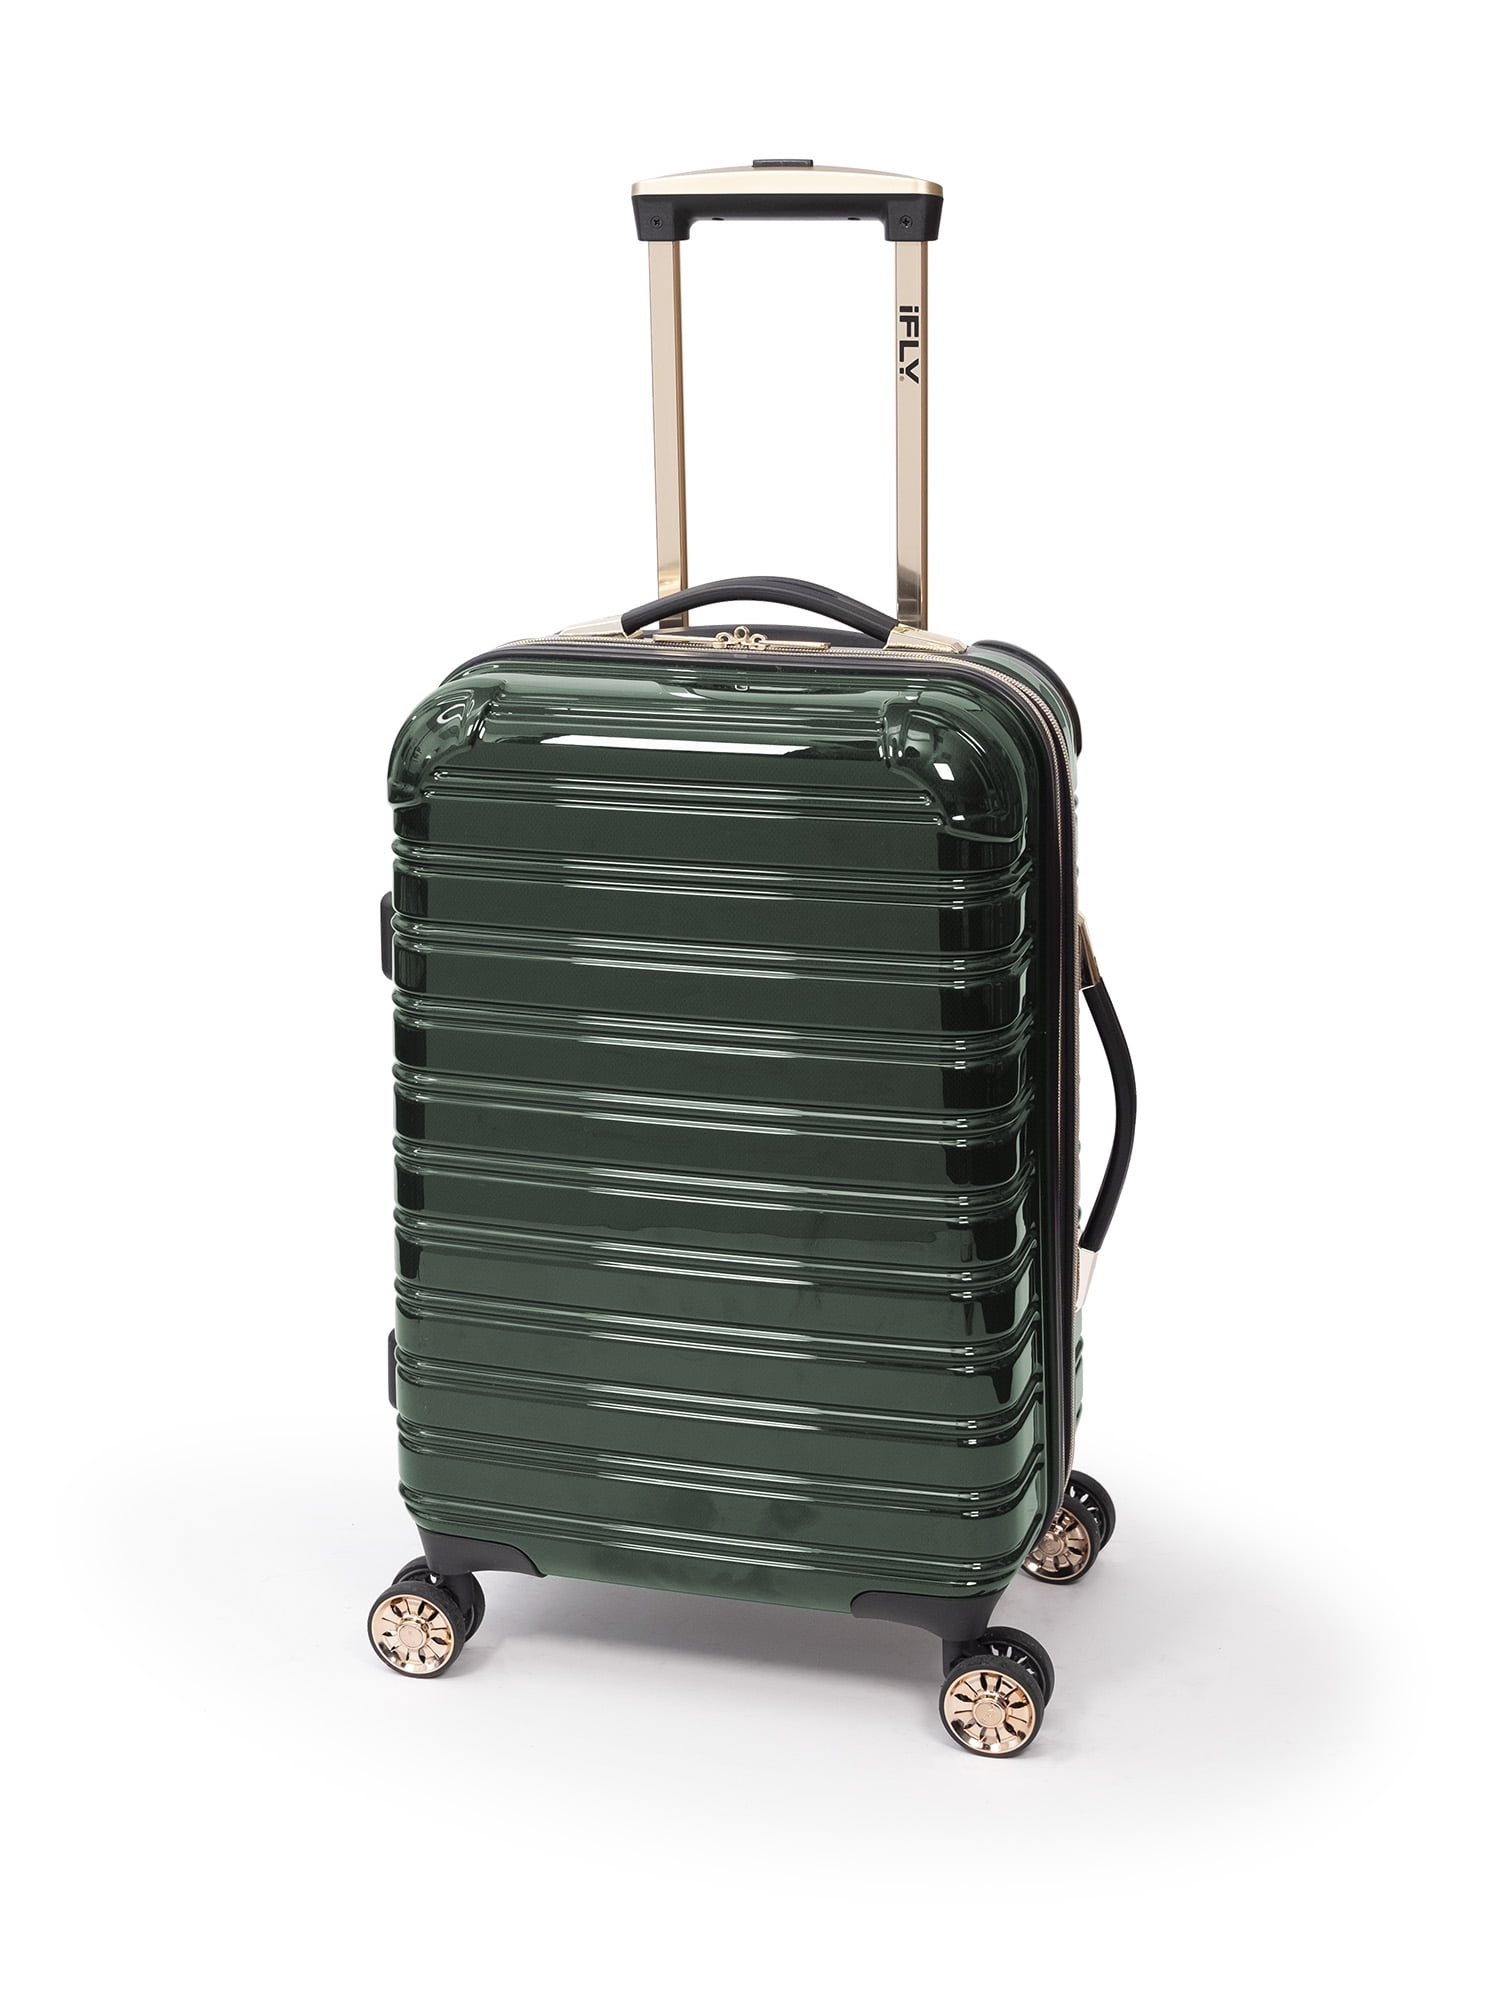 iFLY - iFLY Hard Sided Fibertech Carry On Luggage, 20